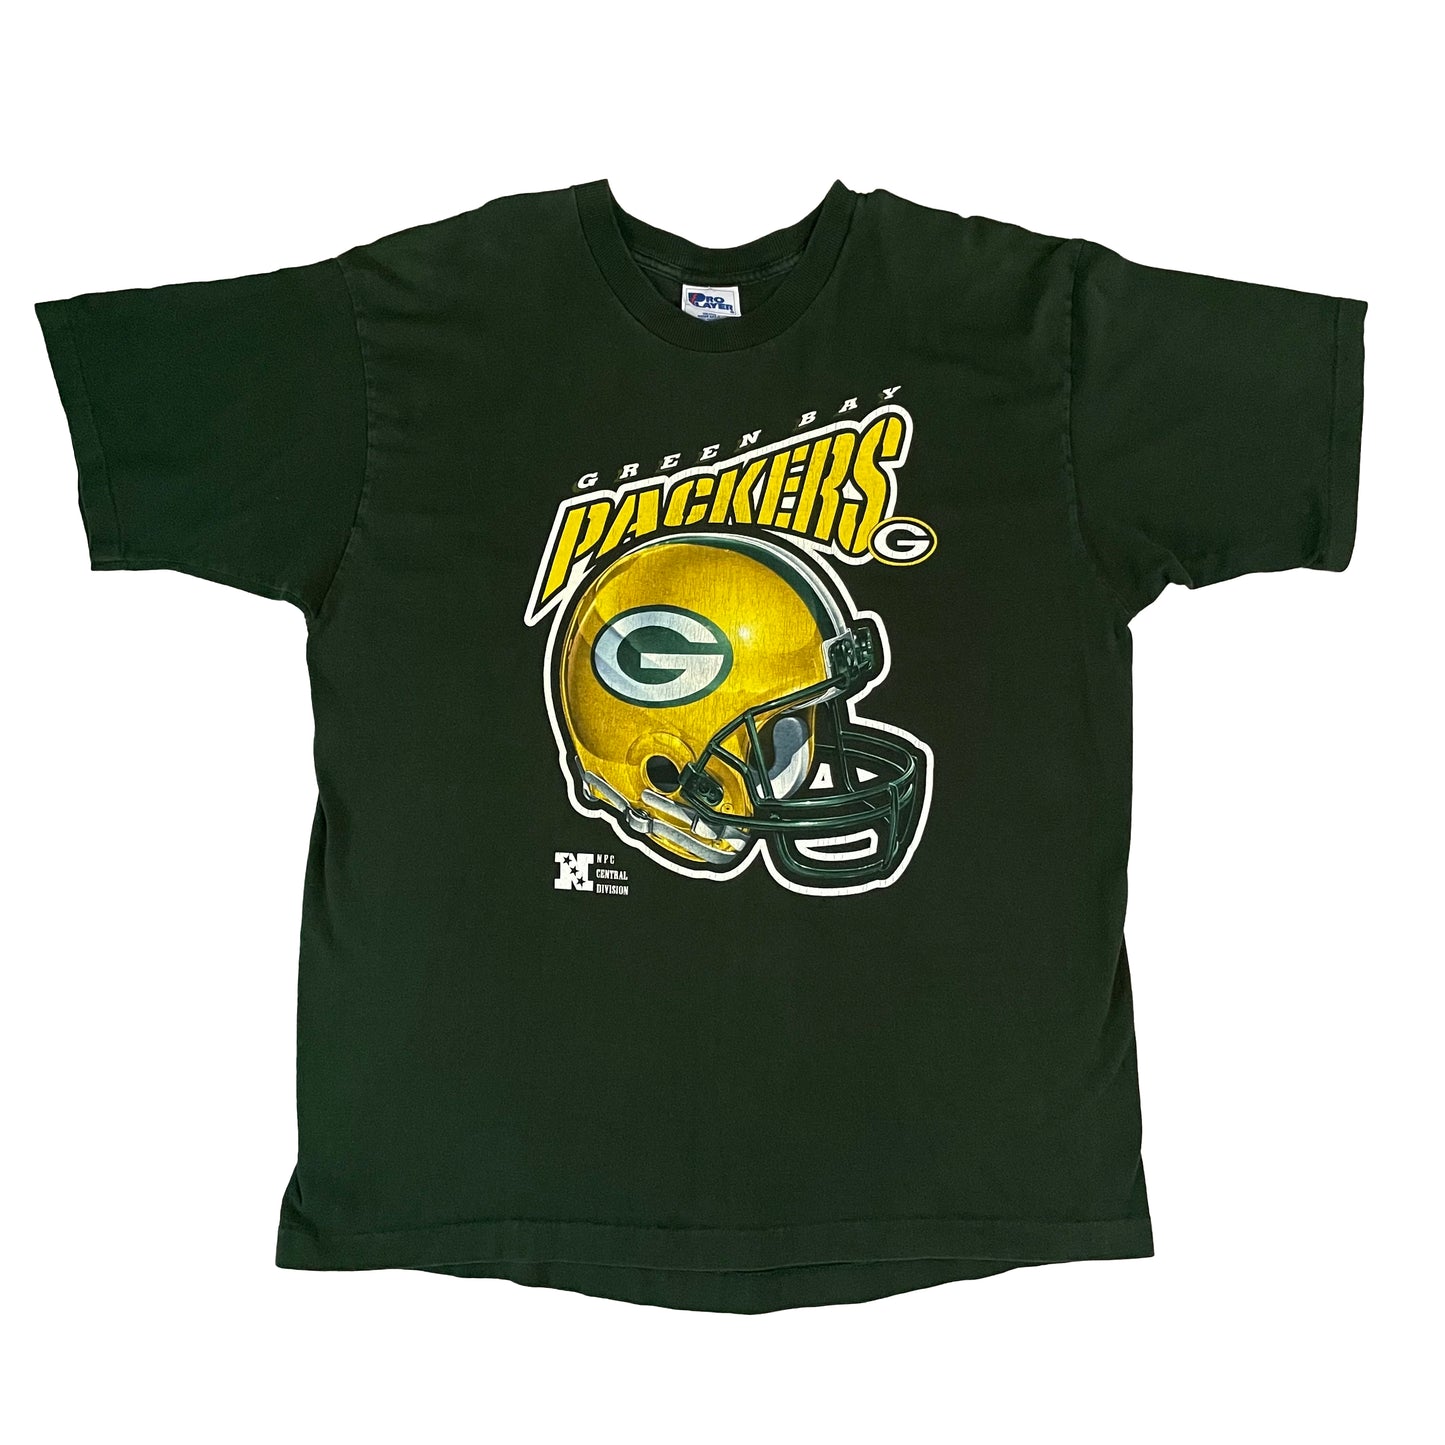 Green Bay Packers shirt